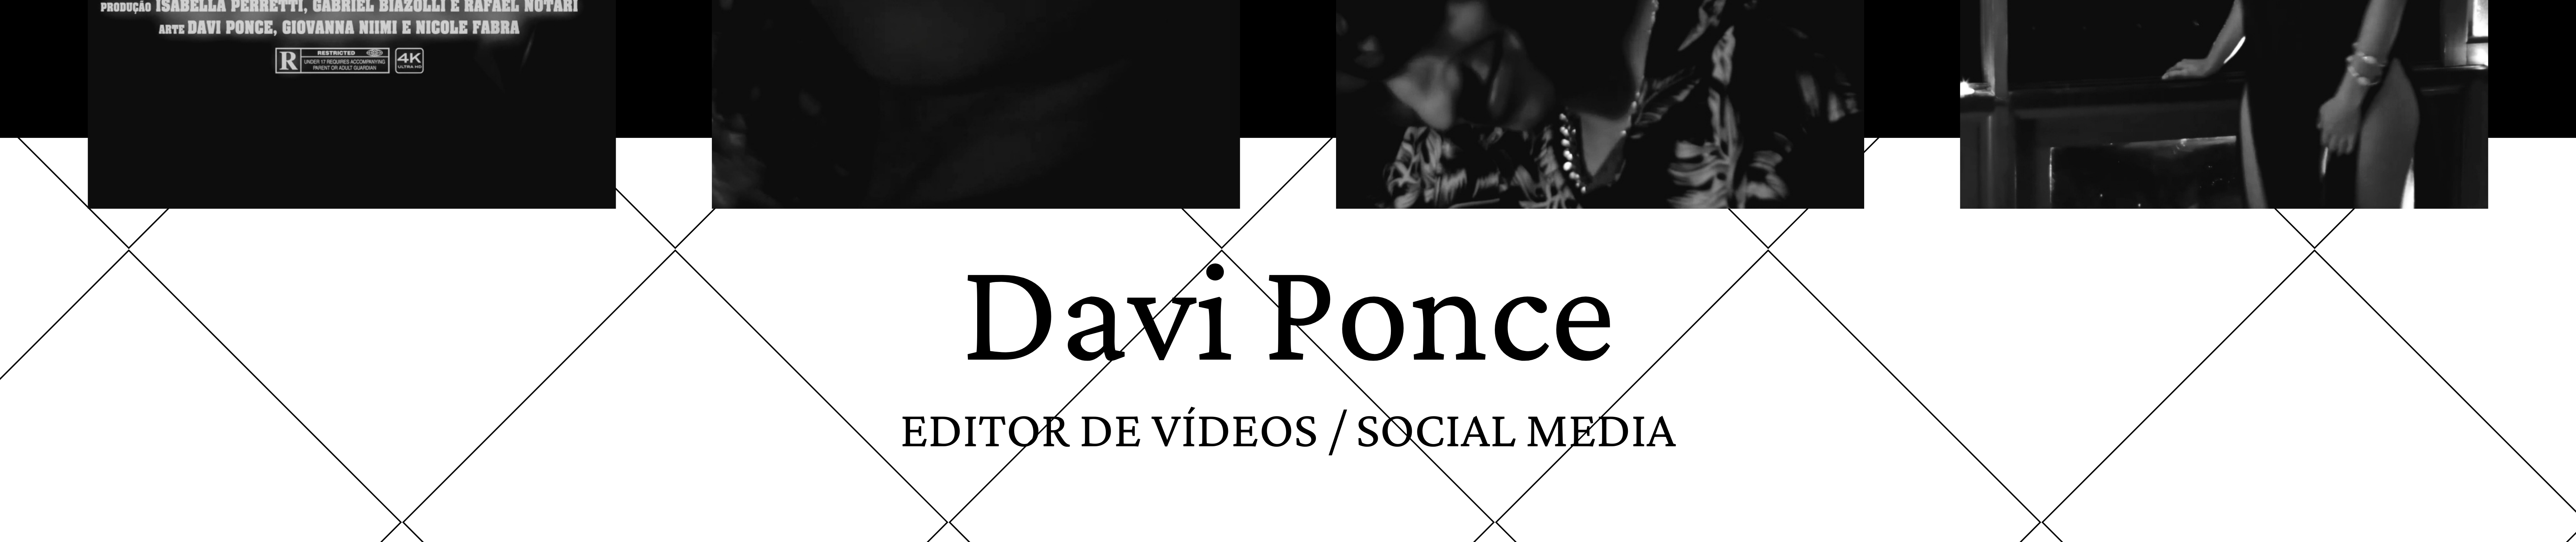 Baner profilu użytkownika Davi Ponce